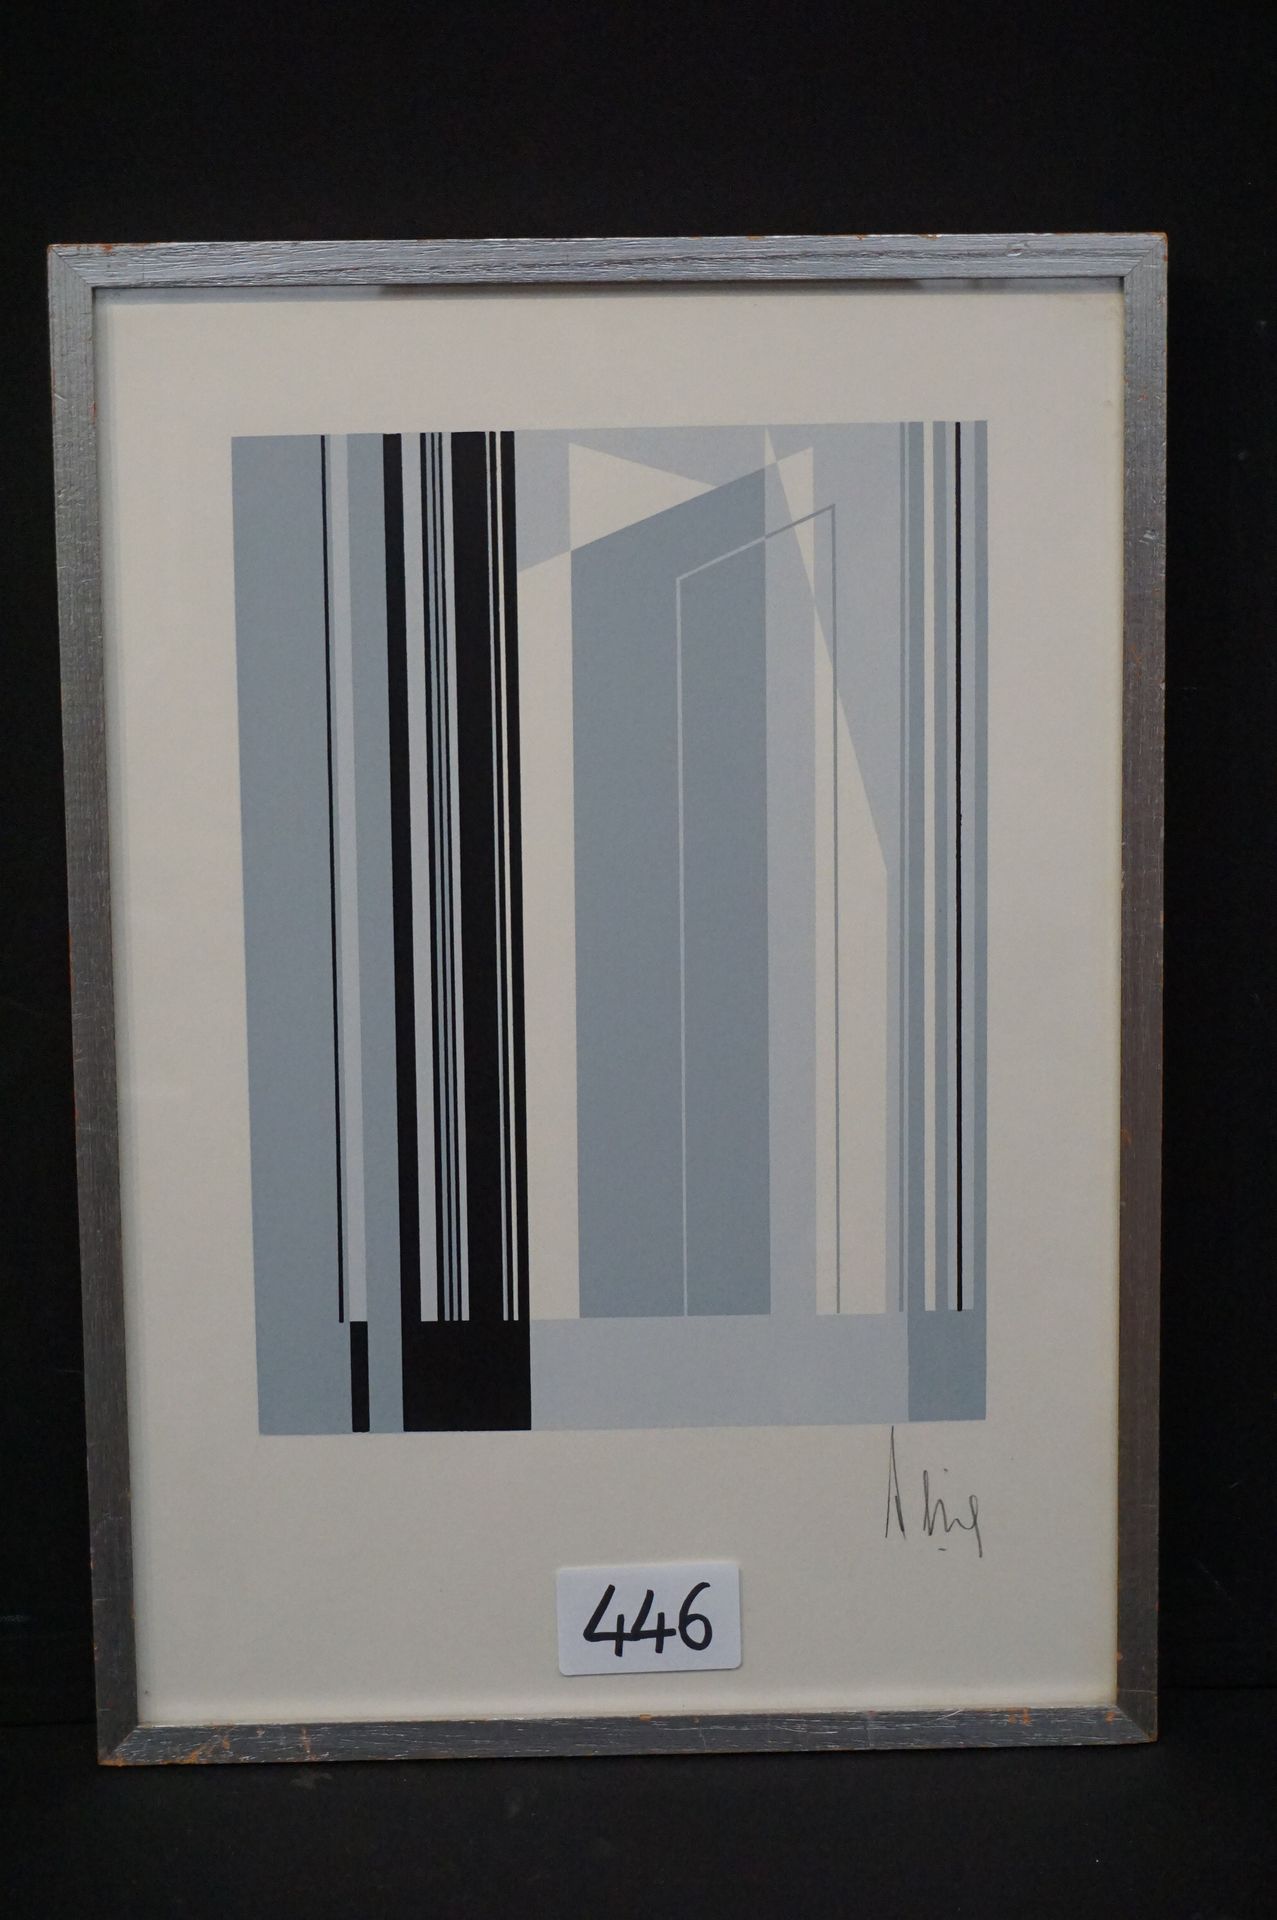 LUC PEIRE (1916 - 1994) "Composición geométrica" - Litografía - 34 x 25 cm